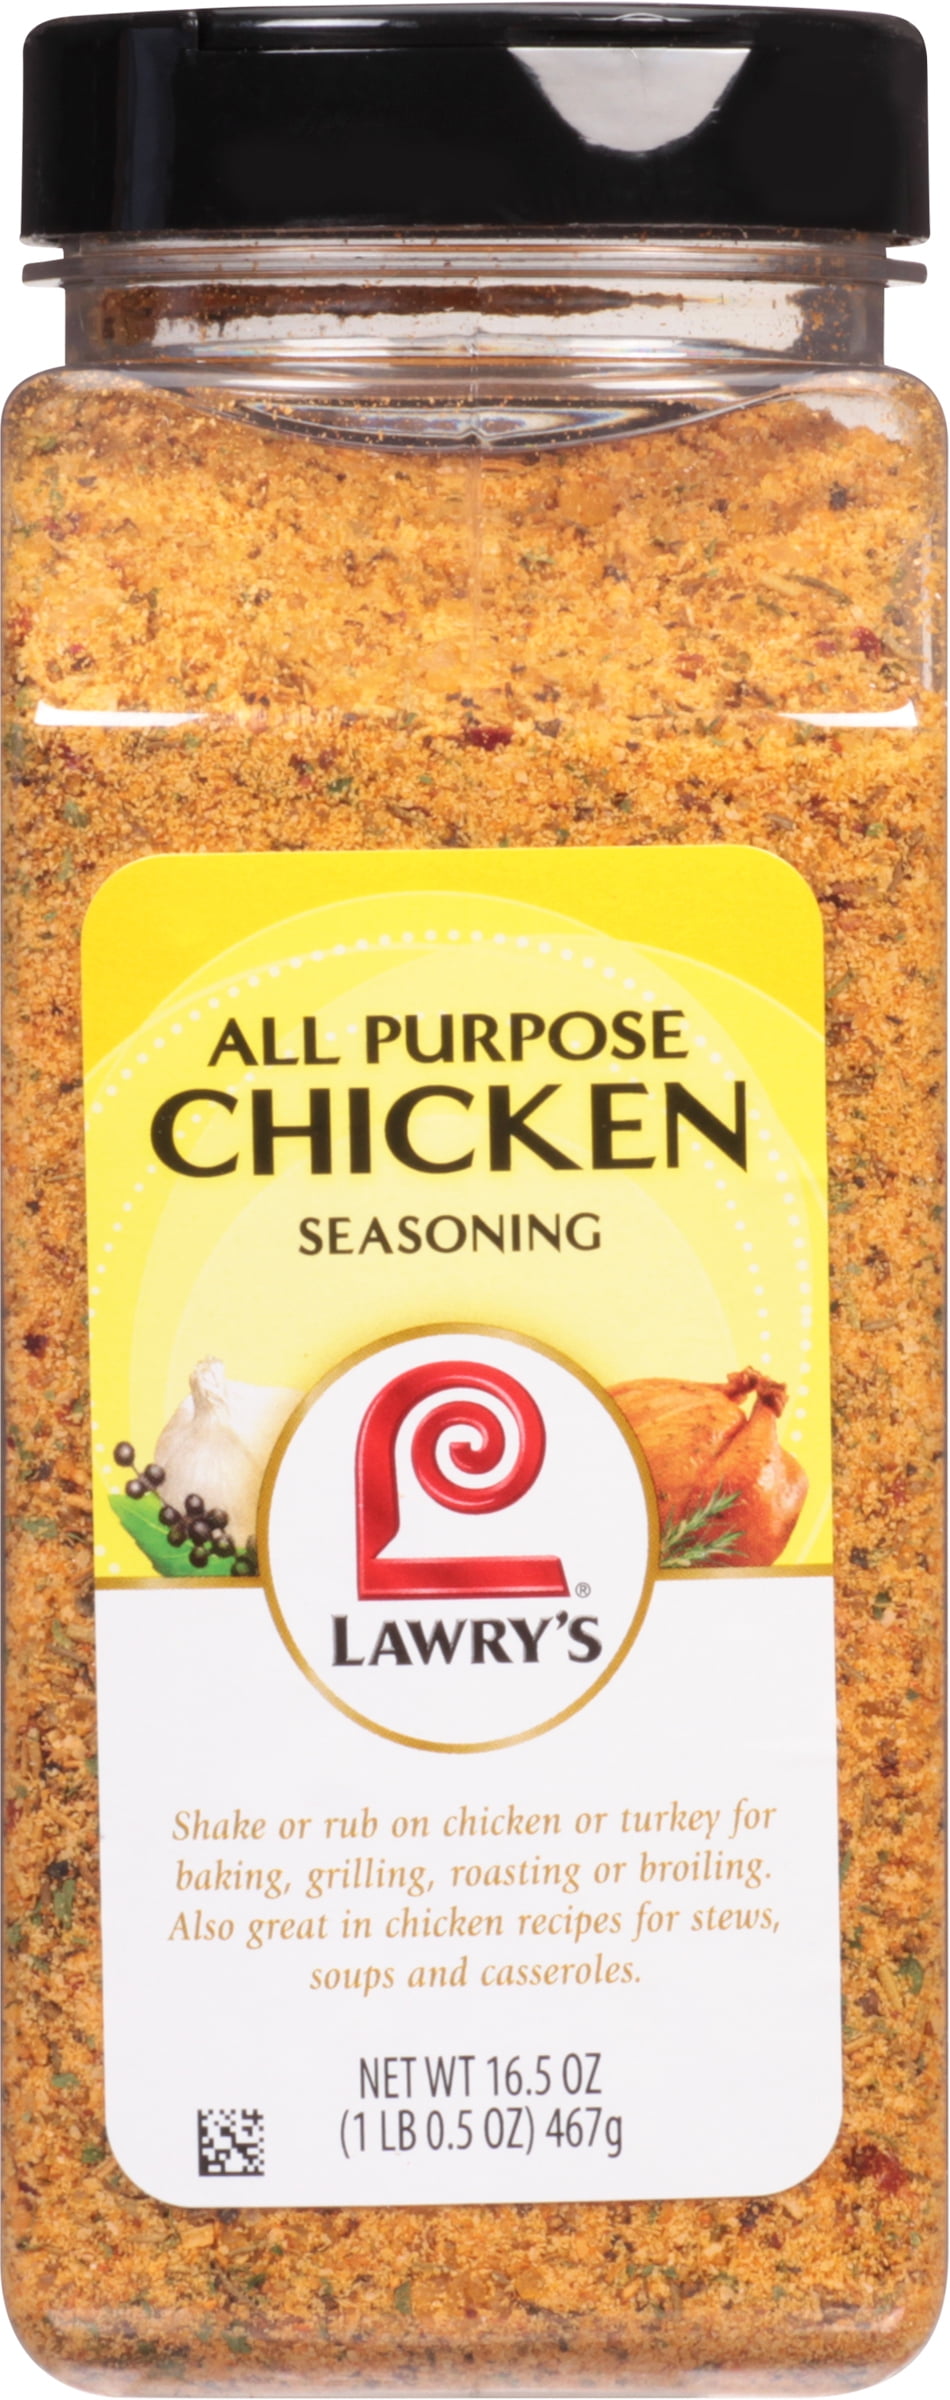 Lawry's All Purpose Chicken Seasoning, 16.5 oz.